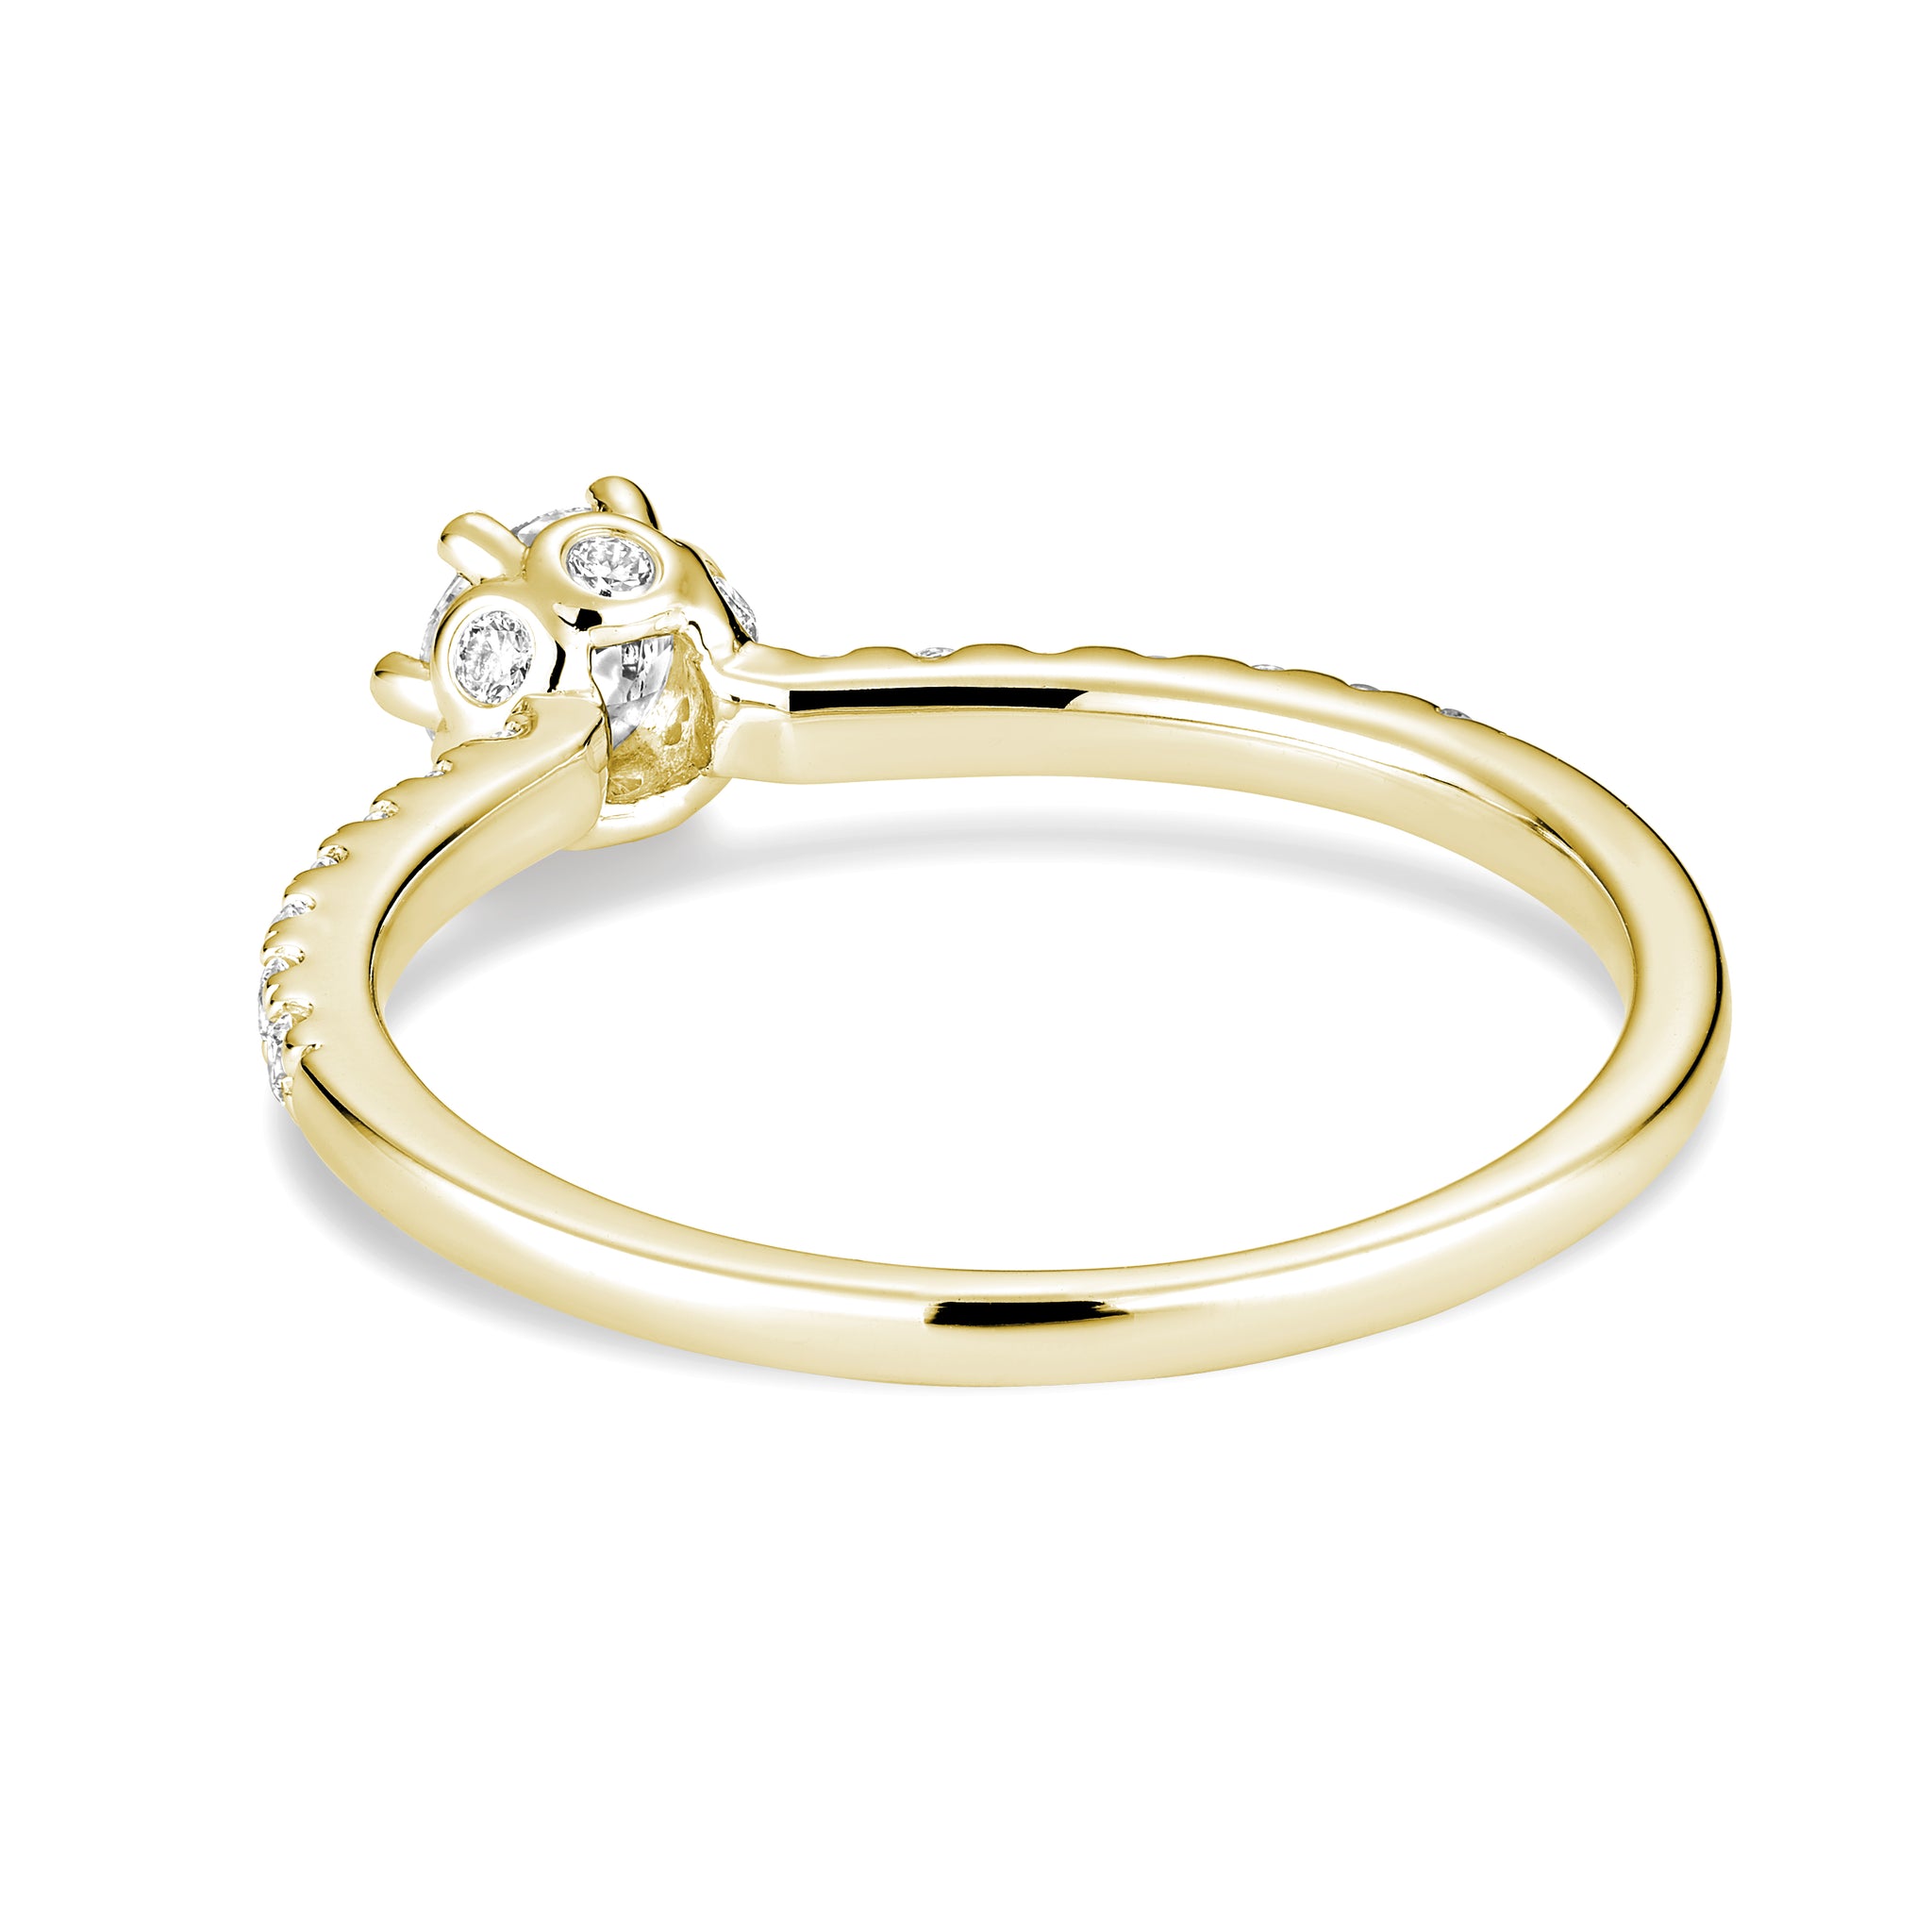 Hemsleys Collection 14K Six-Prong Diamond Engagement Ring